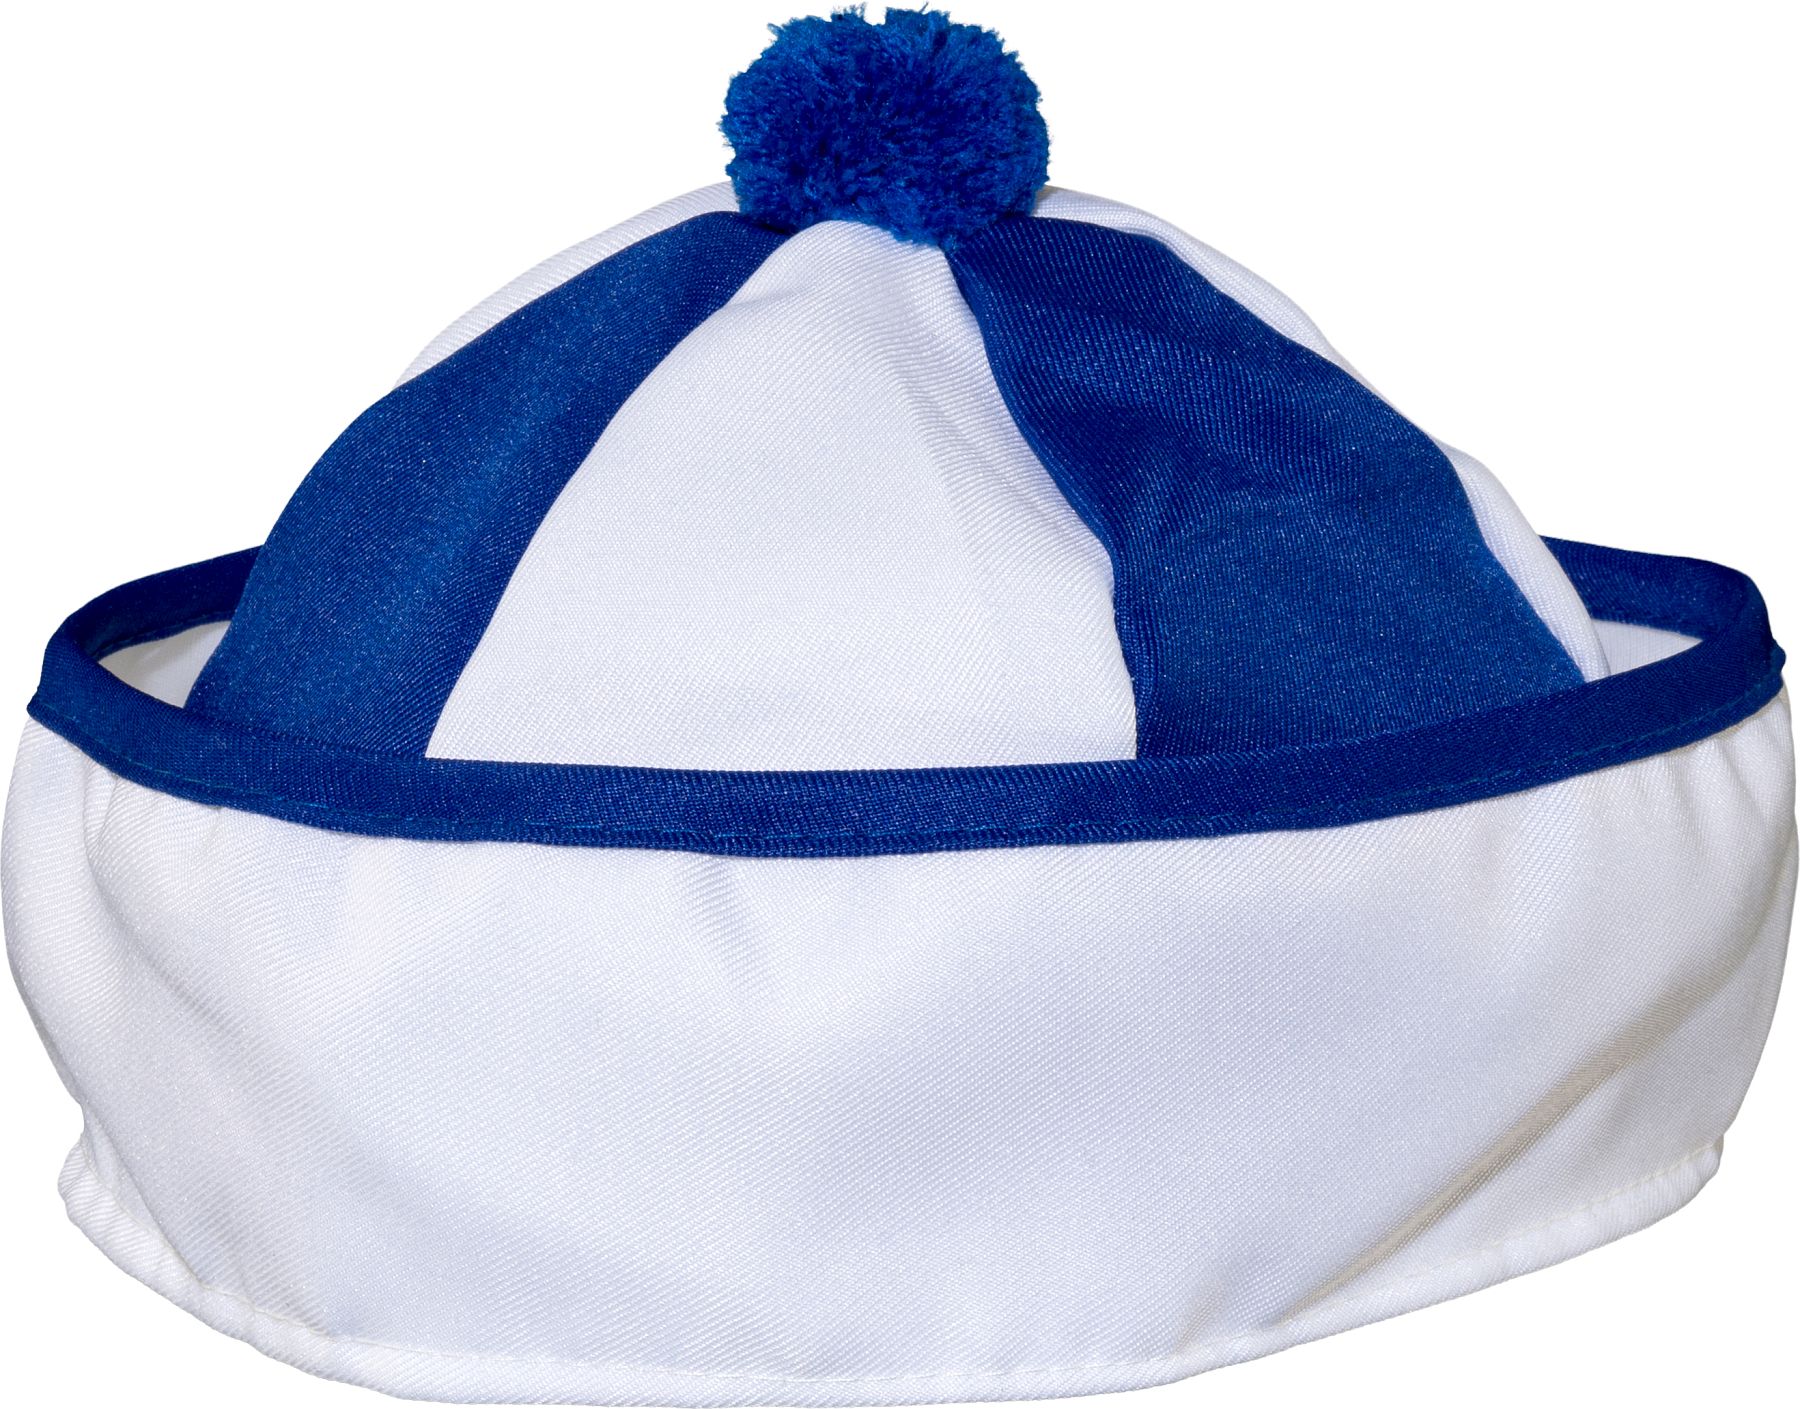 Sailor cap blue/white